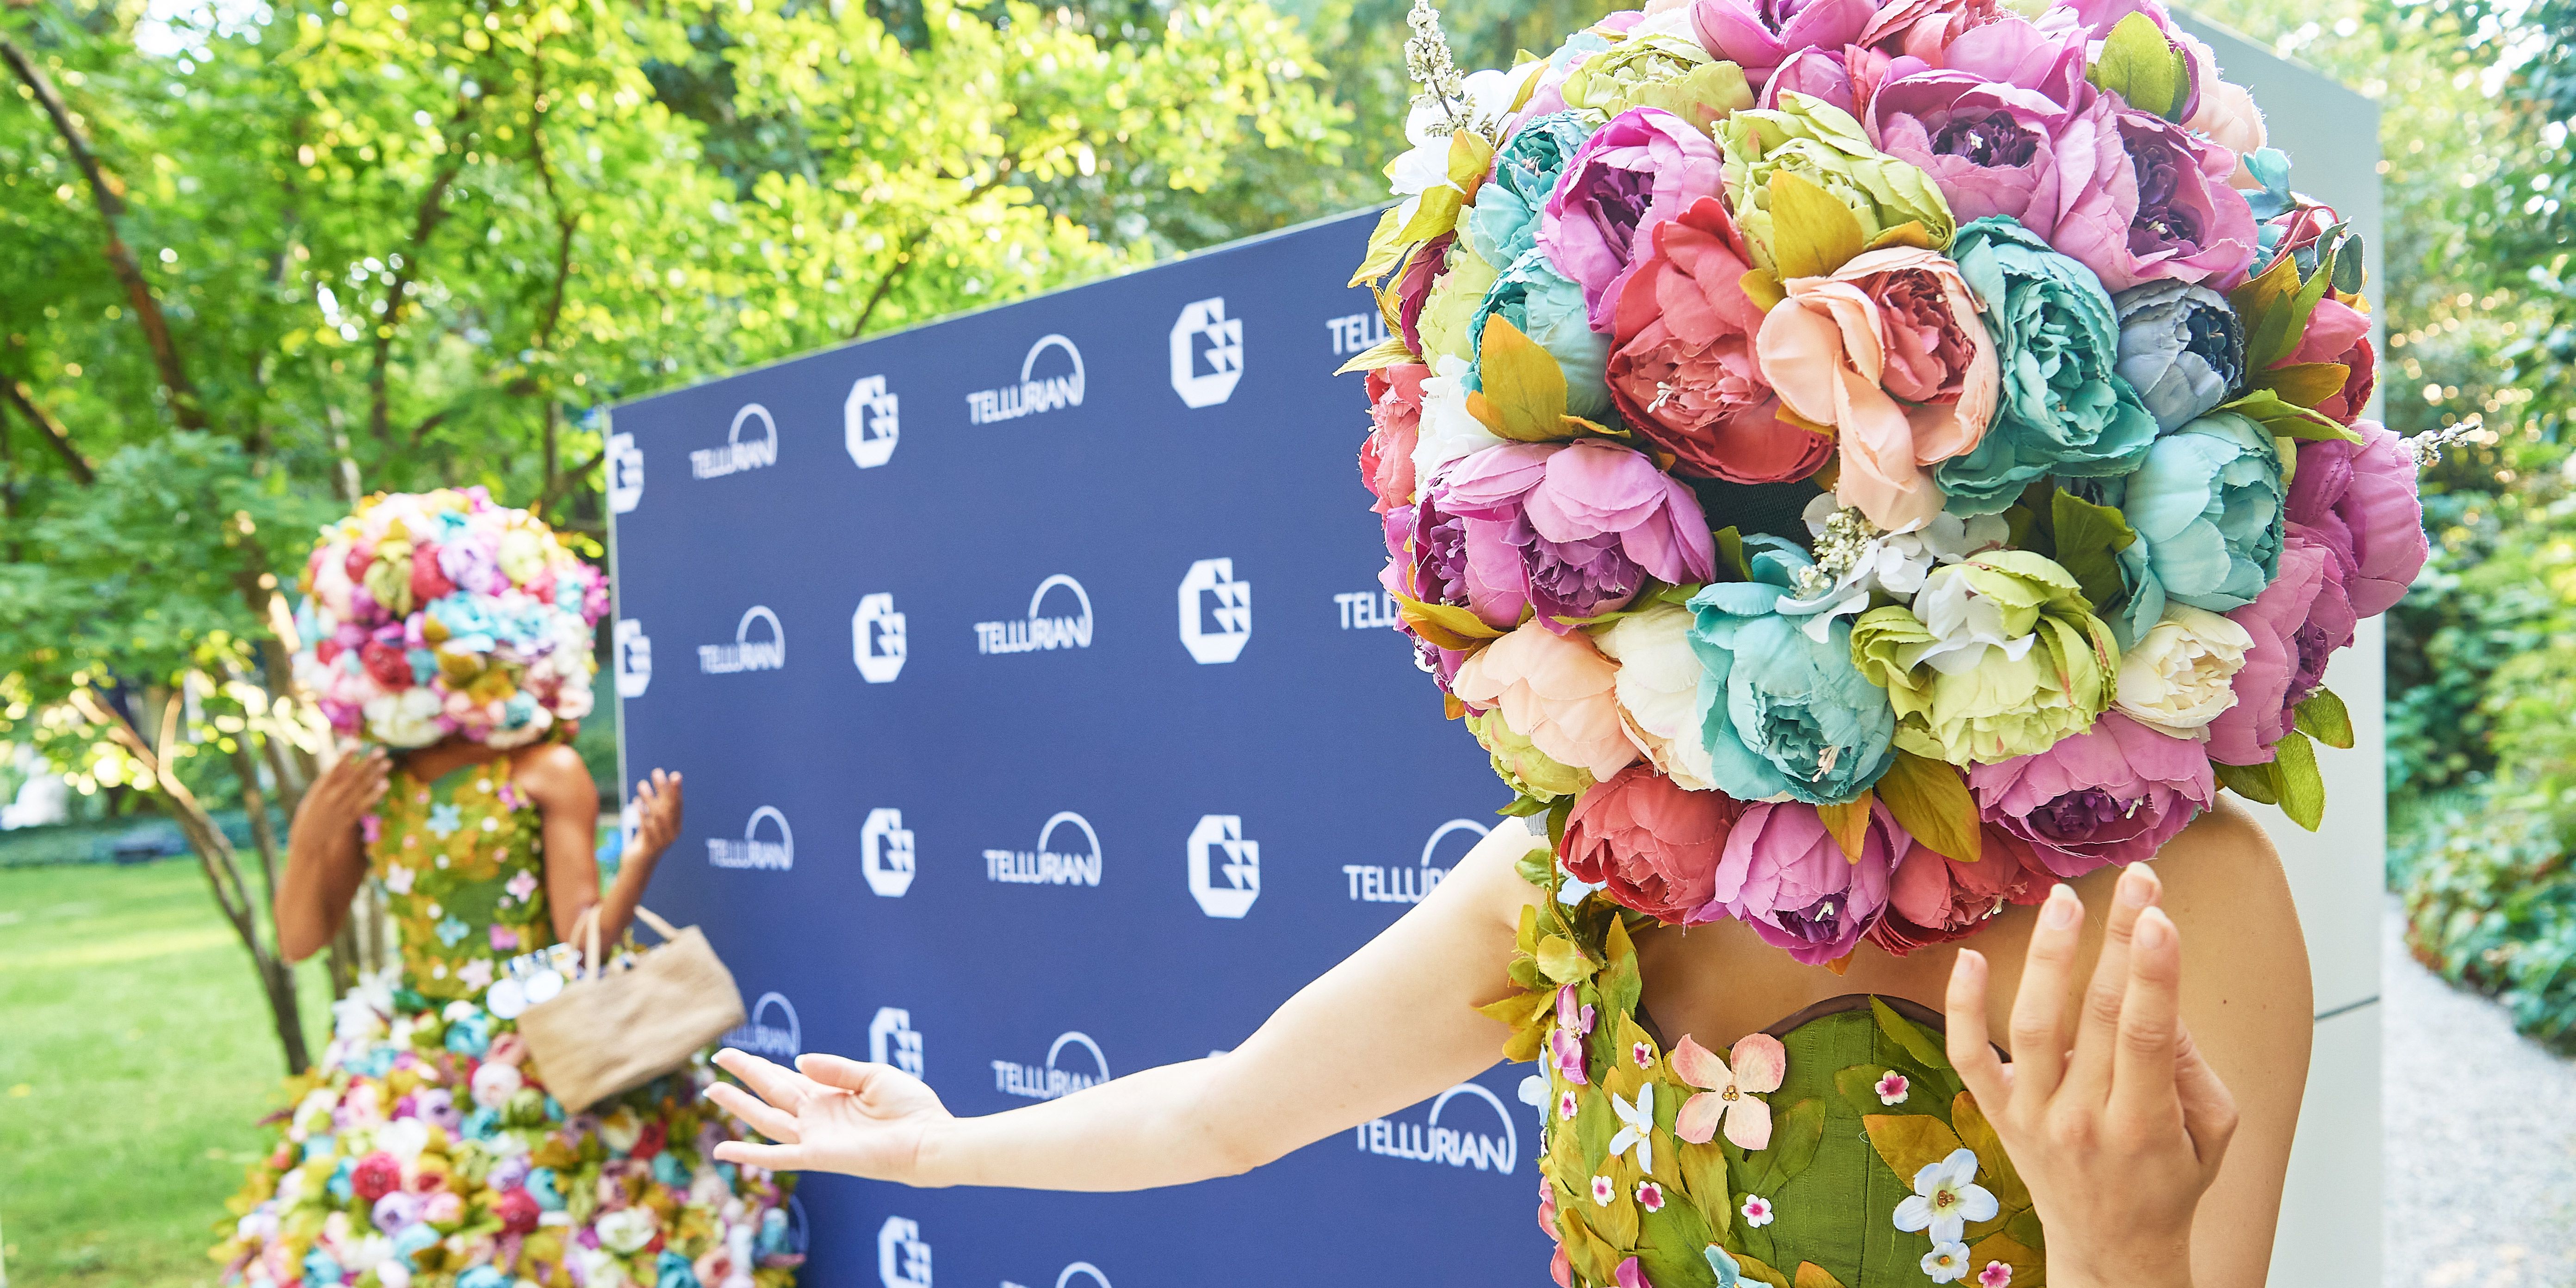 'Fleur de Reve' models provide floral finesse at Milan corporate event